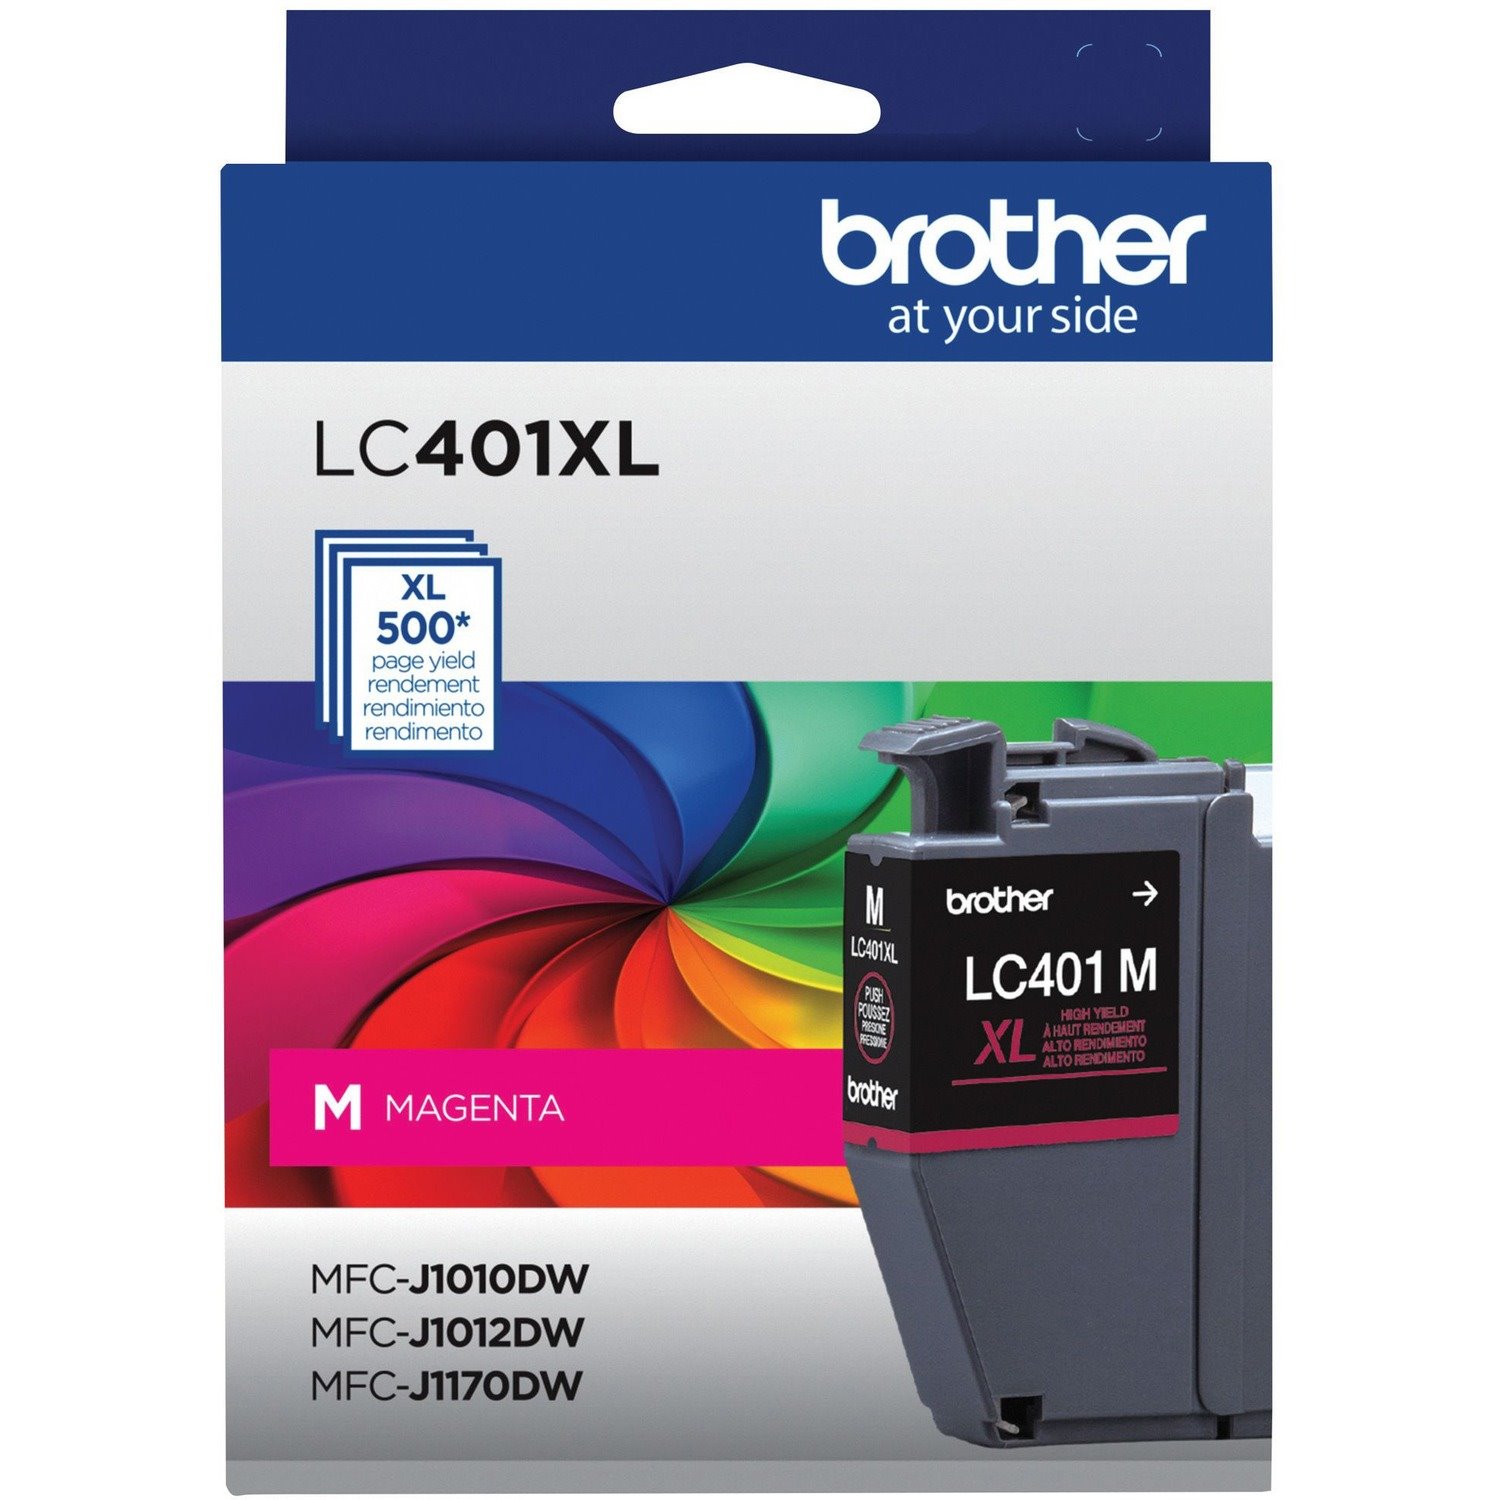 Brother LC401XLMS Original High Yield Inkjet Ink Cartridge - Magenta - 1 Pack